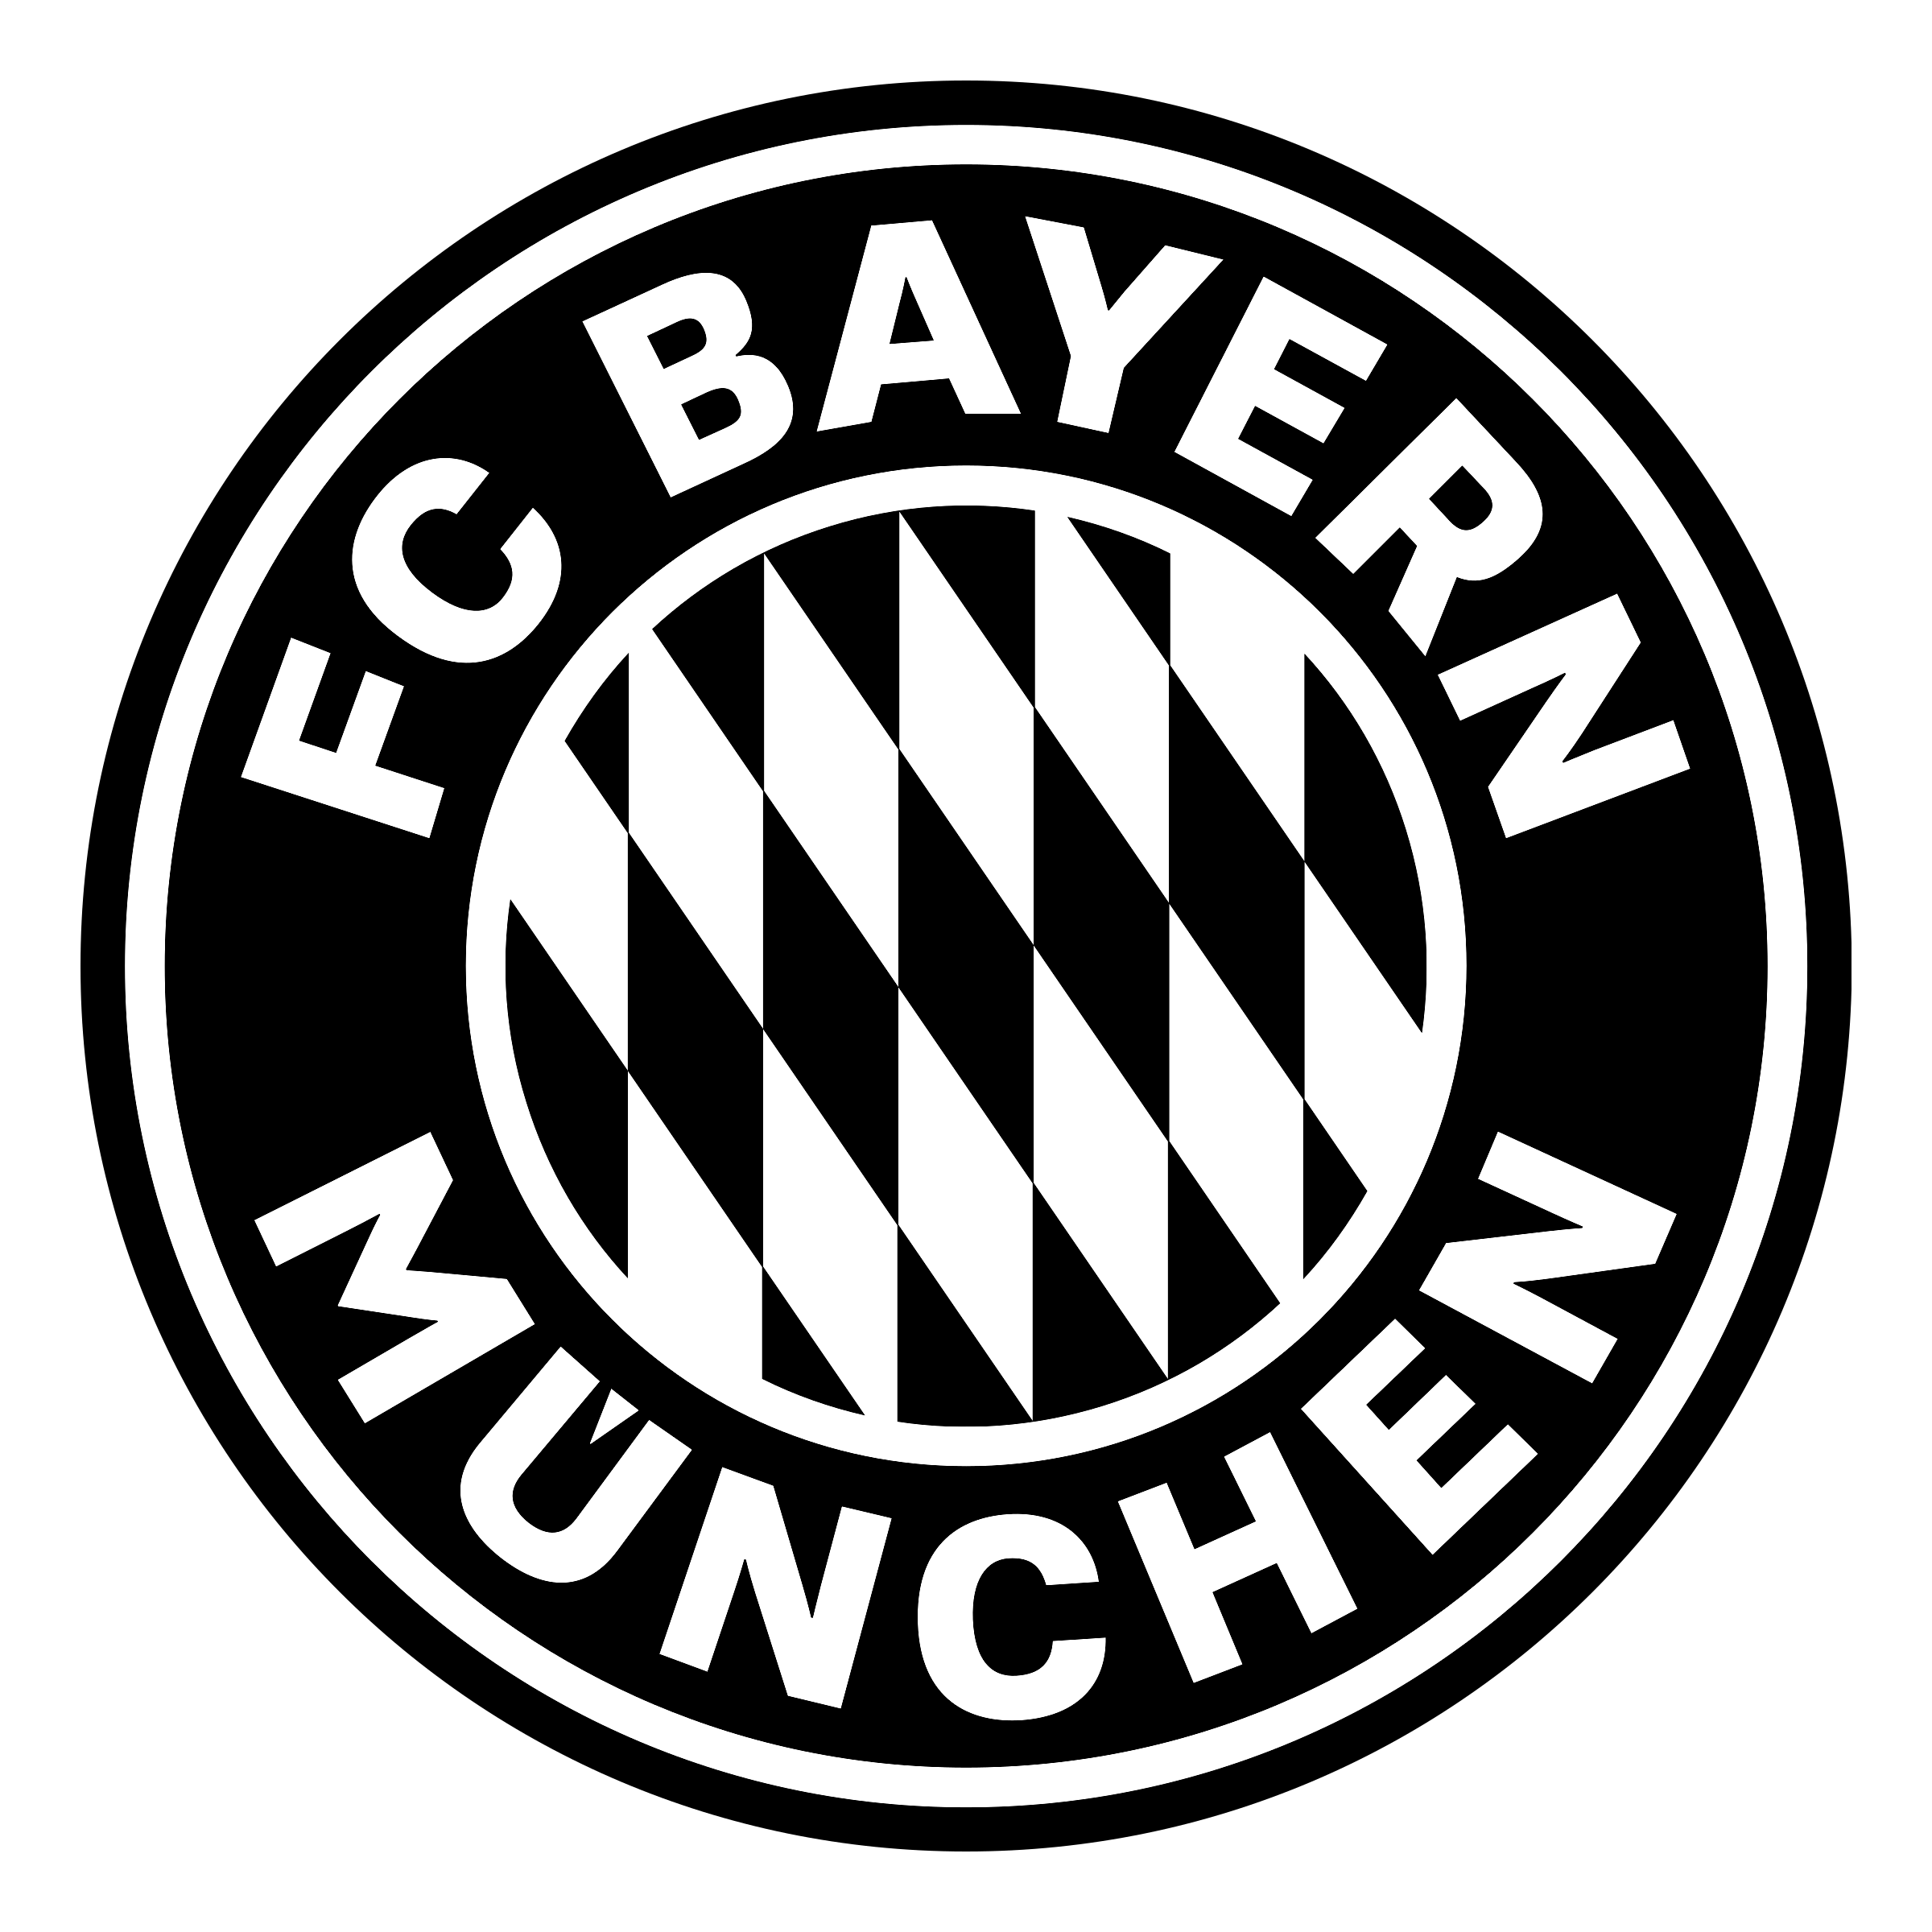 Bayern Munich Logo - Bayern Munich Logo PNG Transparent & SVG Vector